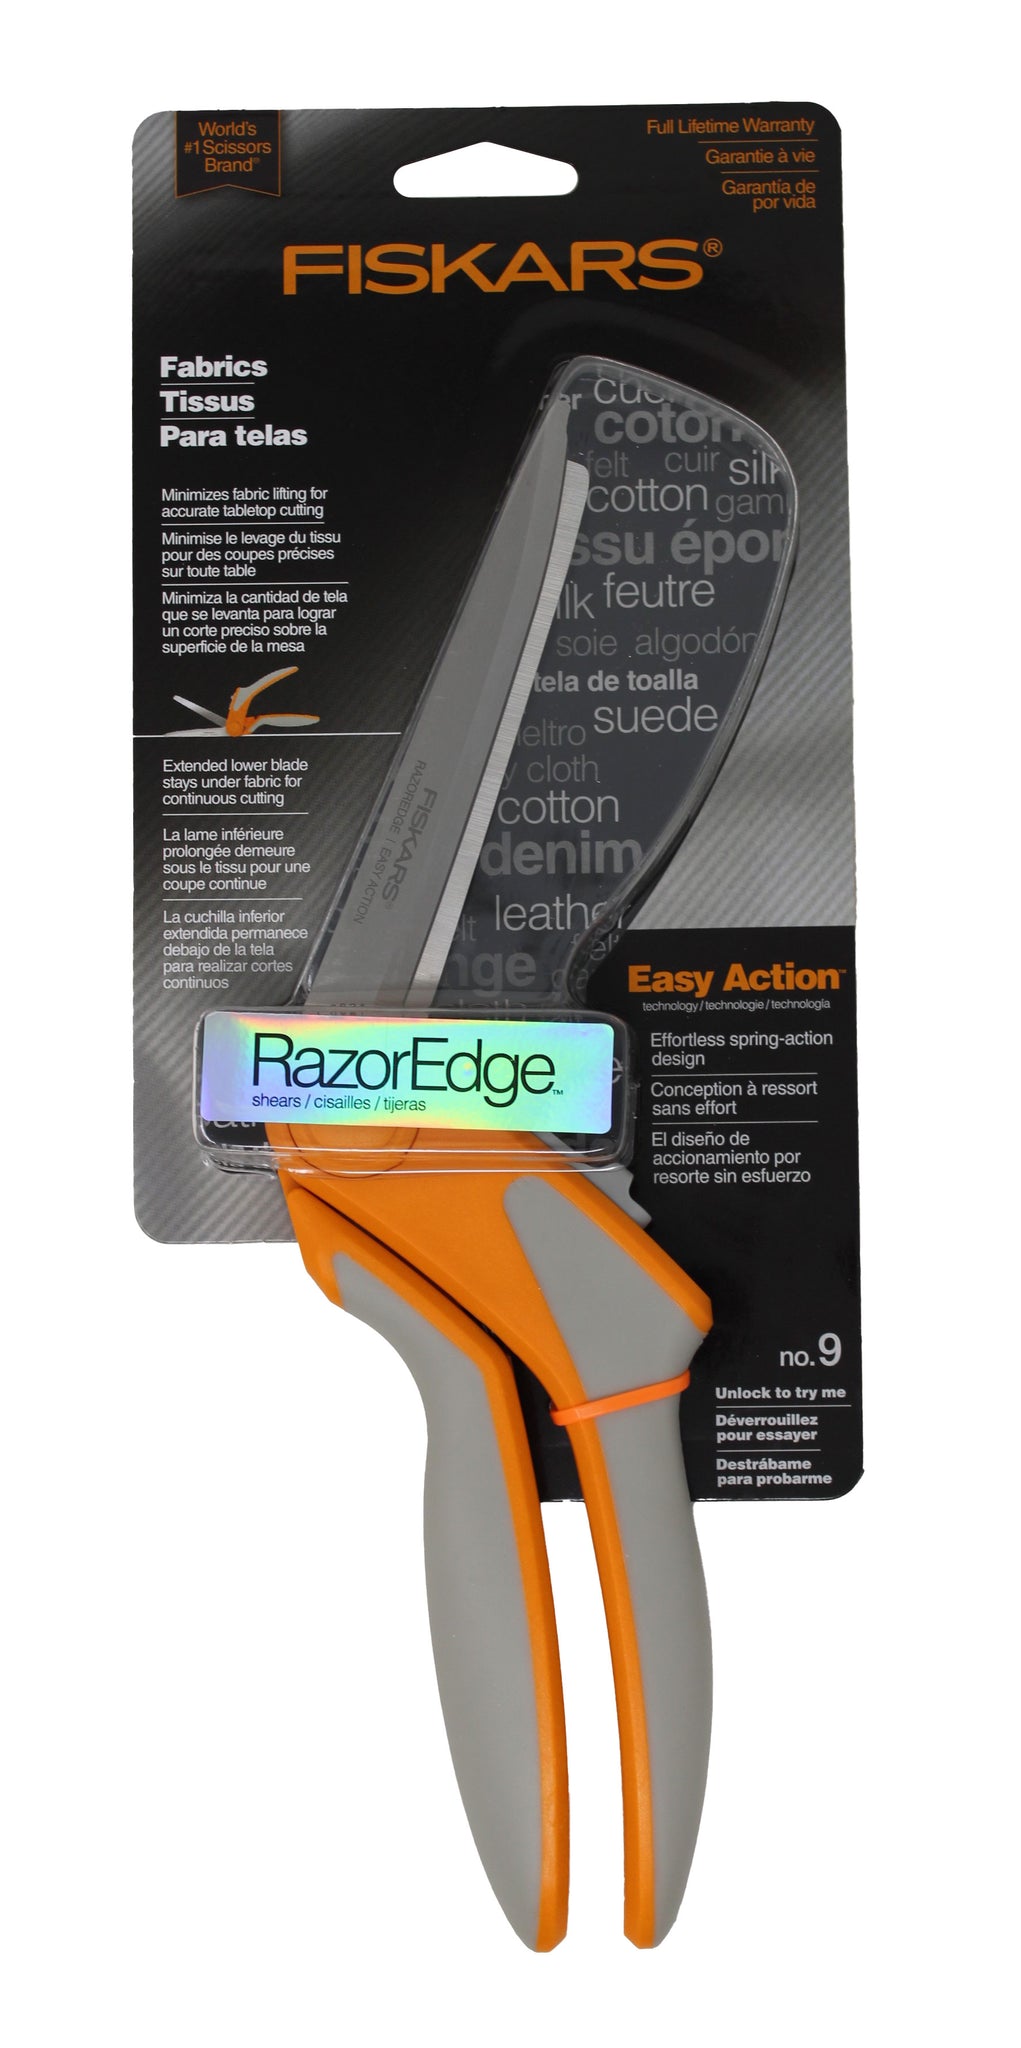 Fiskars Razor Edge Fabric Shears - 8 - The Online Drugstore ©